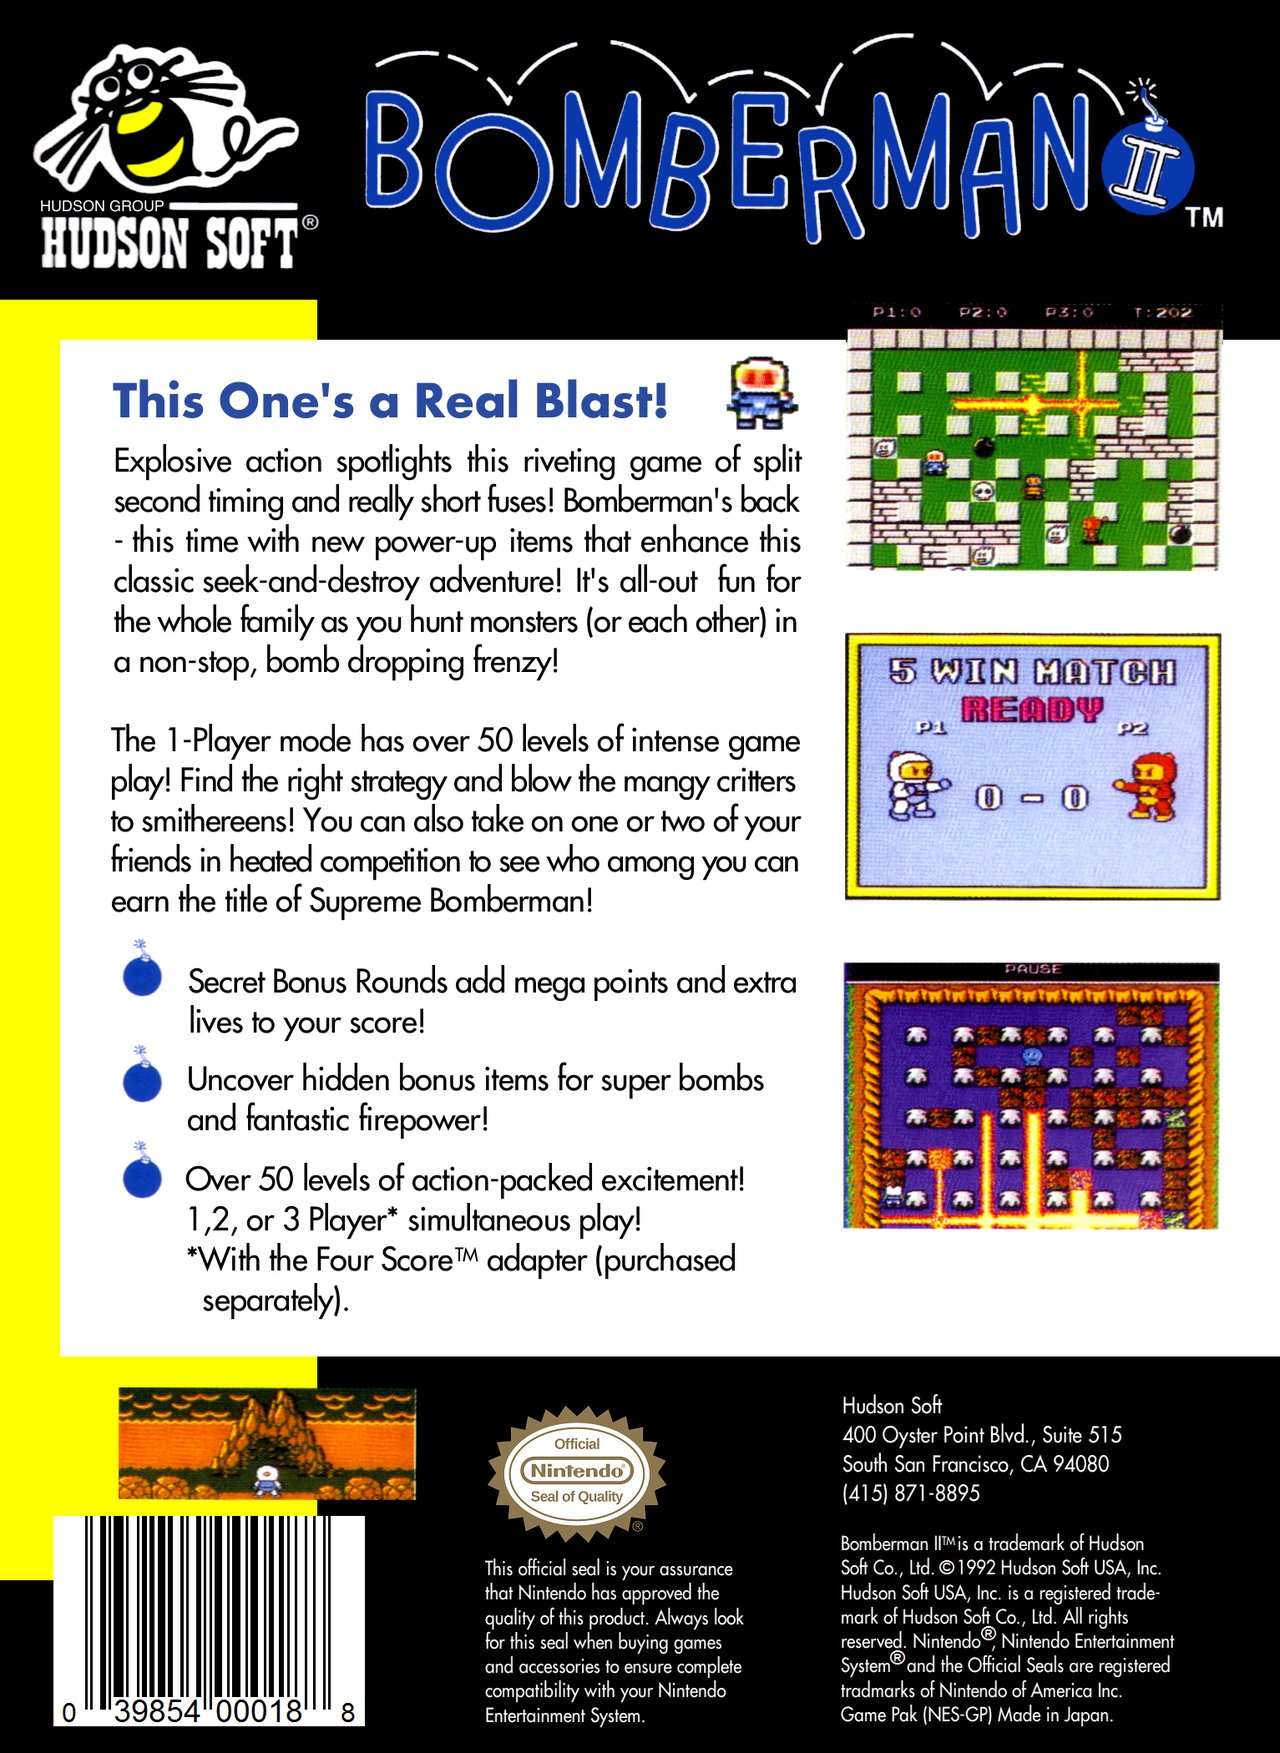 NES - Bomberman II Poster